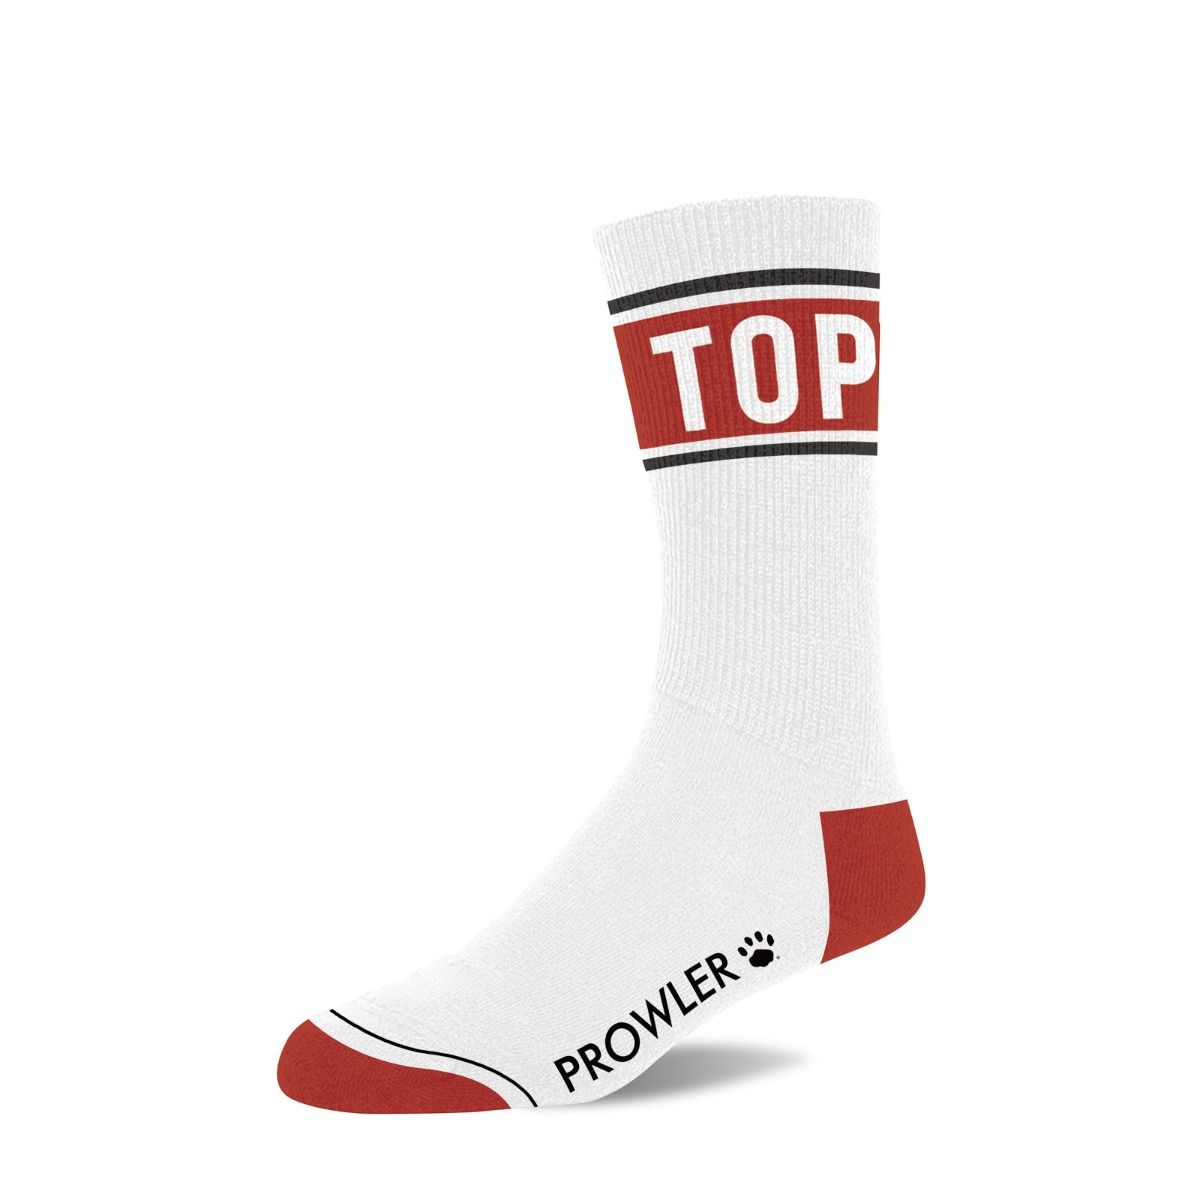 PROWLER Top Socks